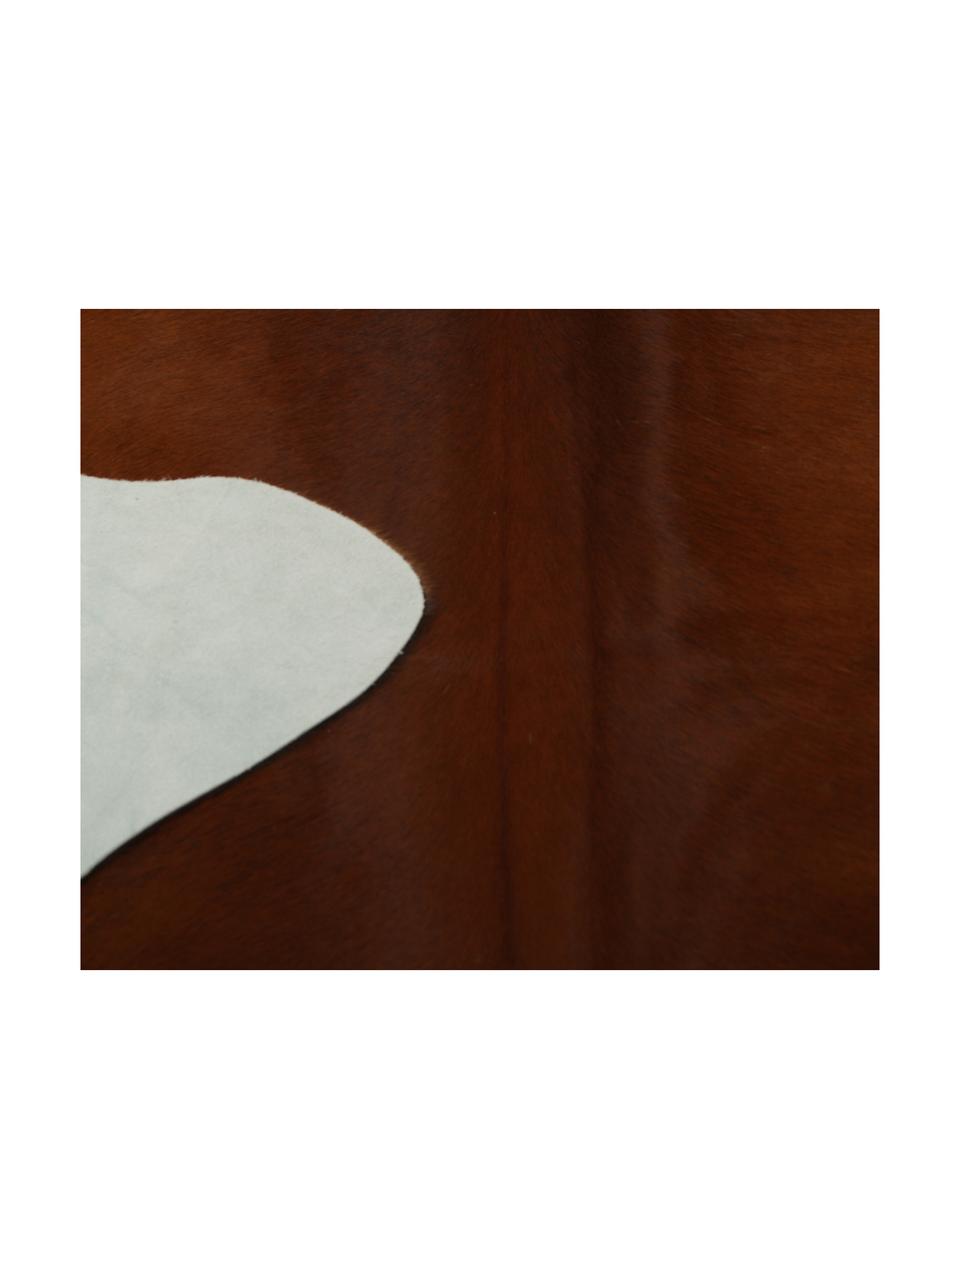 Alfombra de piel bovina Jura, Piel bovina, Marrón, beige, Piel bovina única 983, 160 x 180 cm